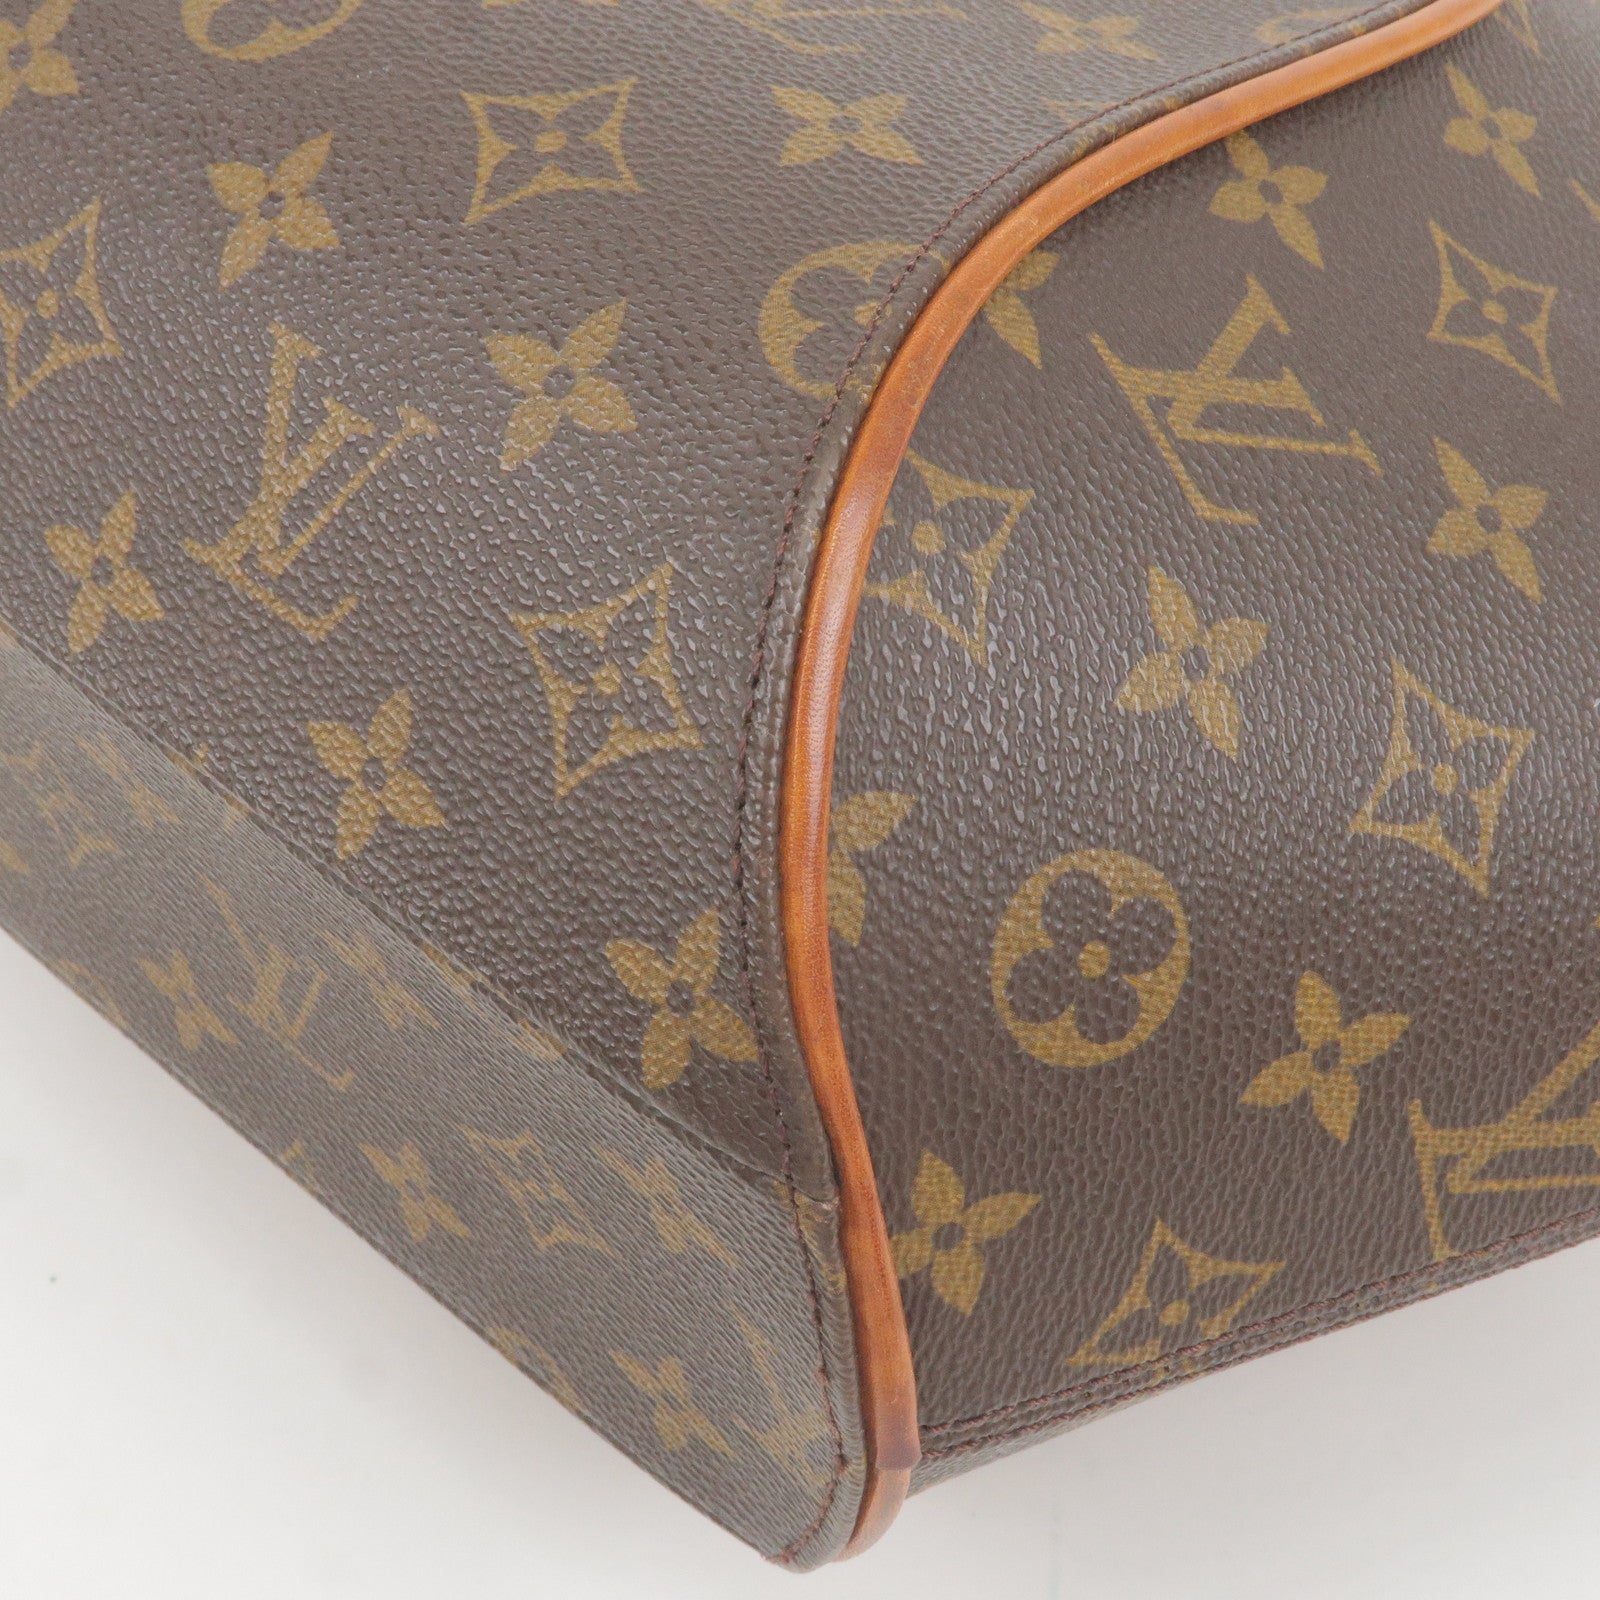 Louis Vuitton Ellipse Small Model Handbag in Brown Monogram Canvas